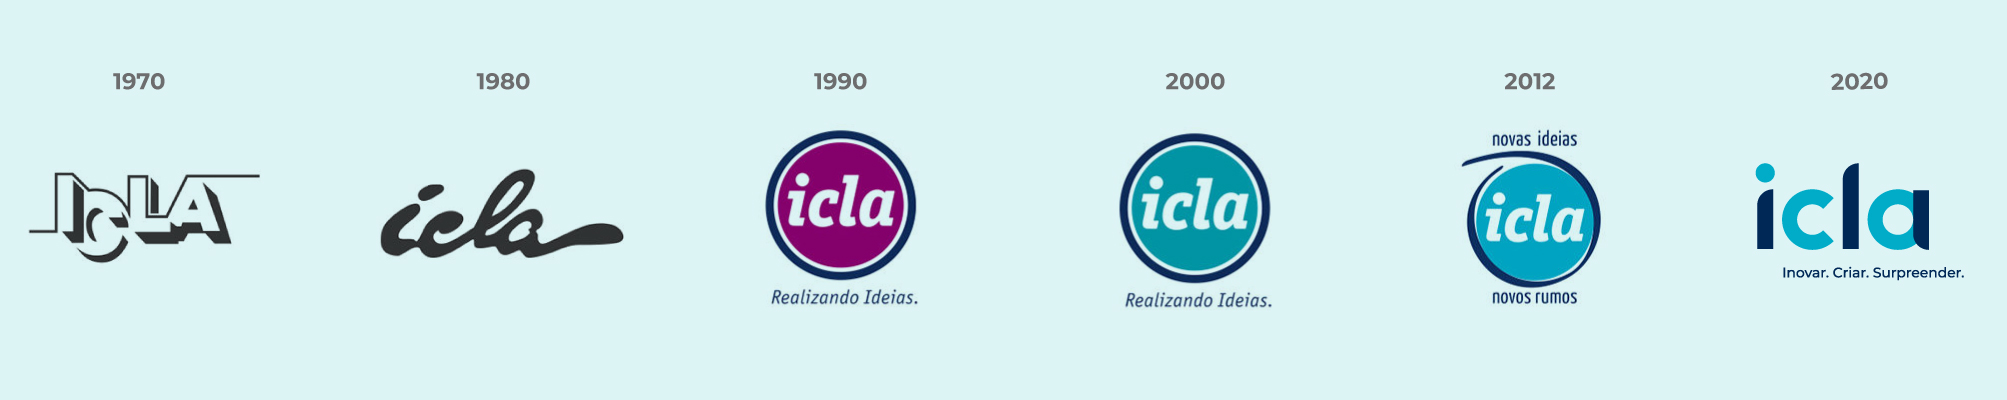 Evolução Icla